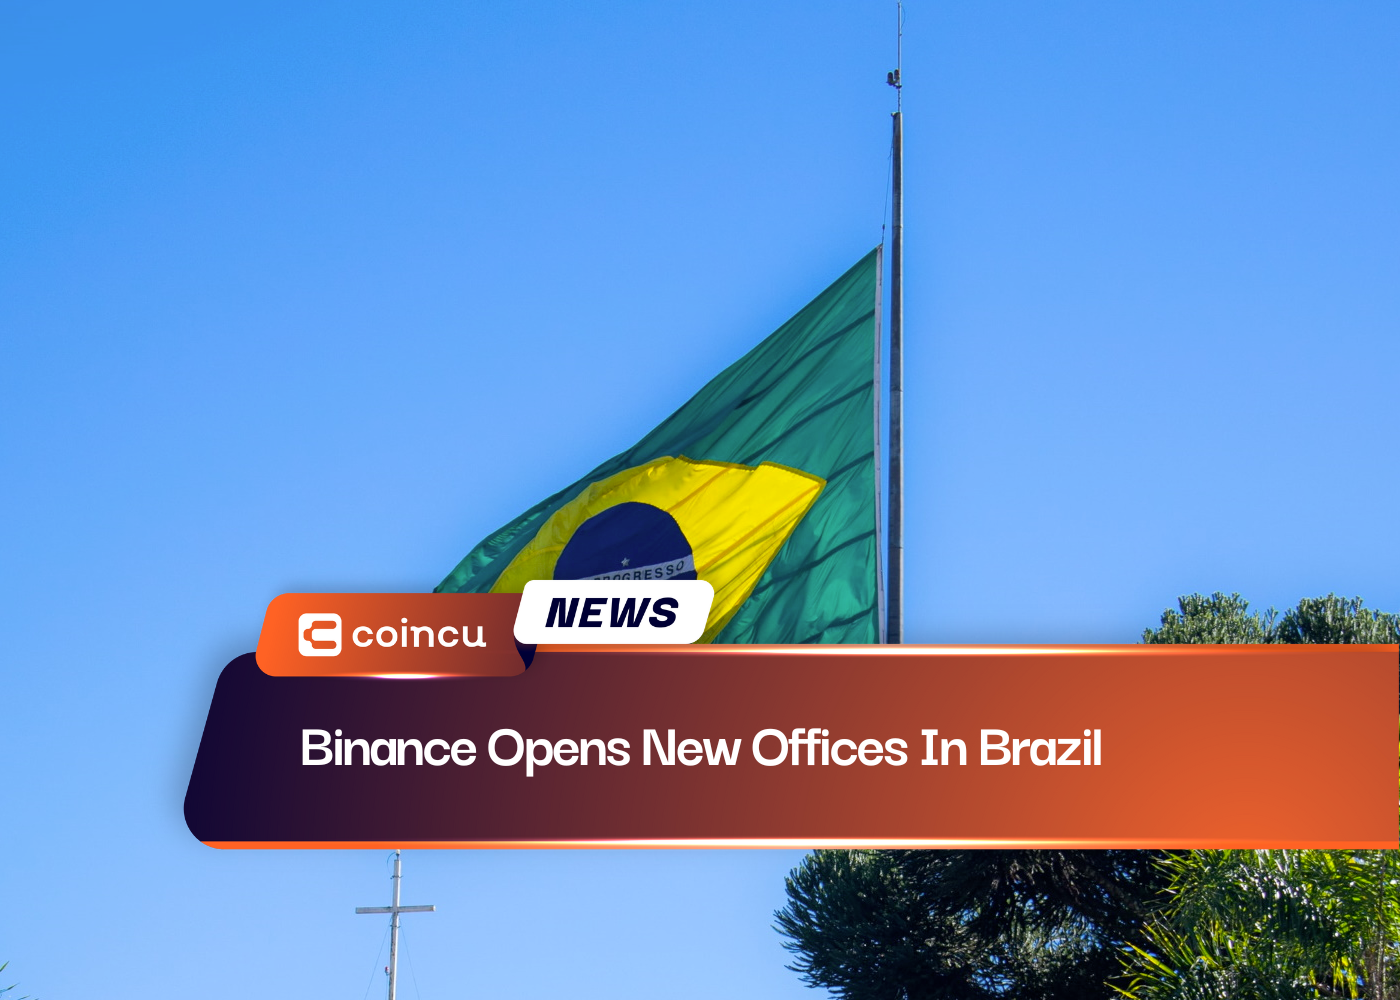 Binance Opens New Offices In Brazil